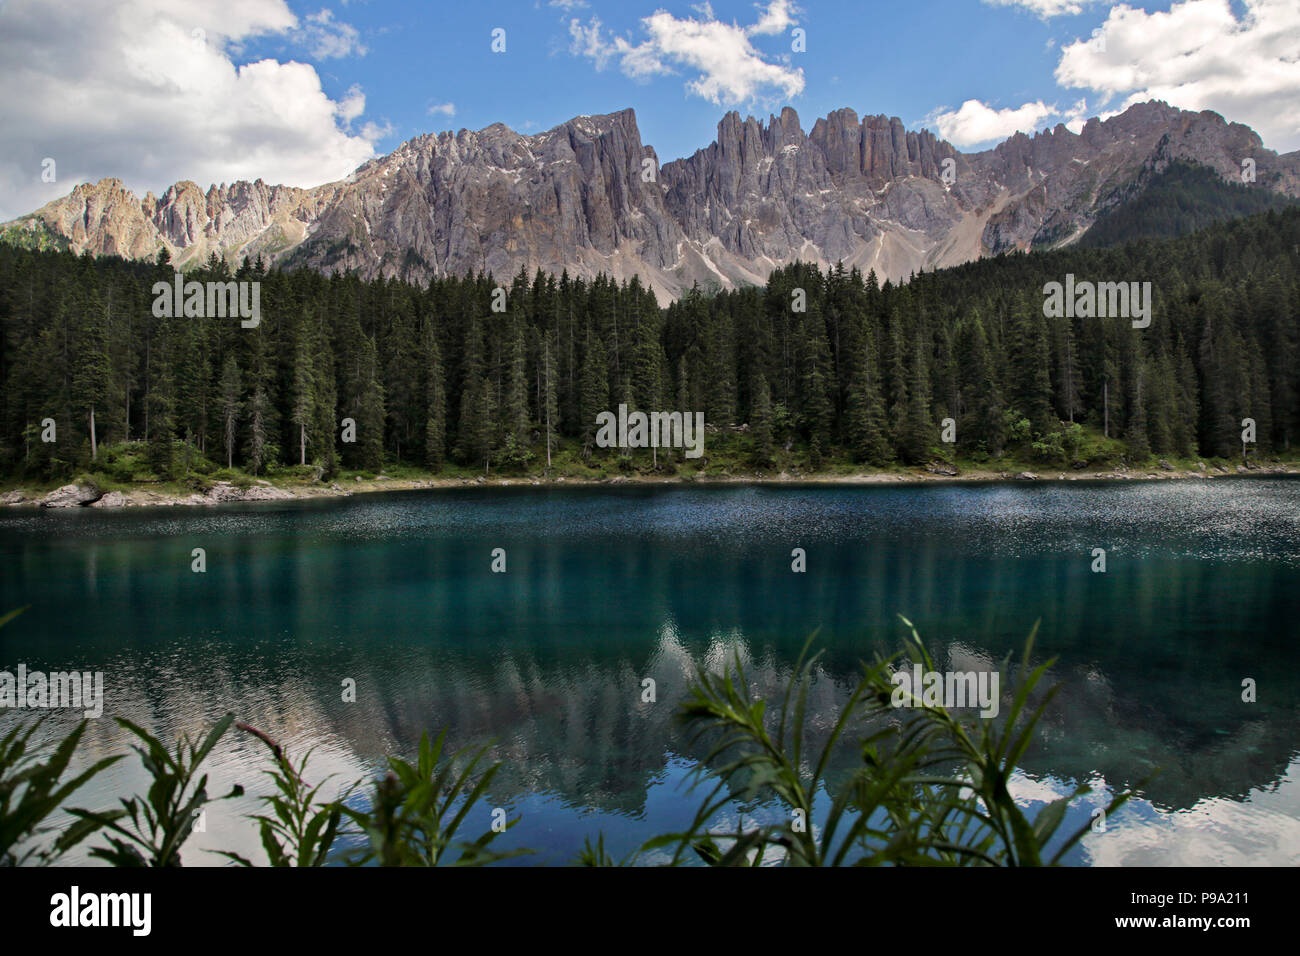 The Latemar Mountains and Lake Carezza, Dolomites, Italy Stock Photo